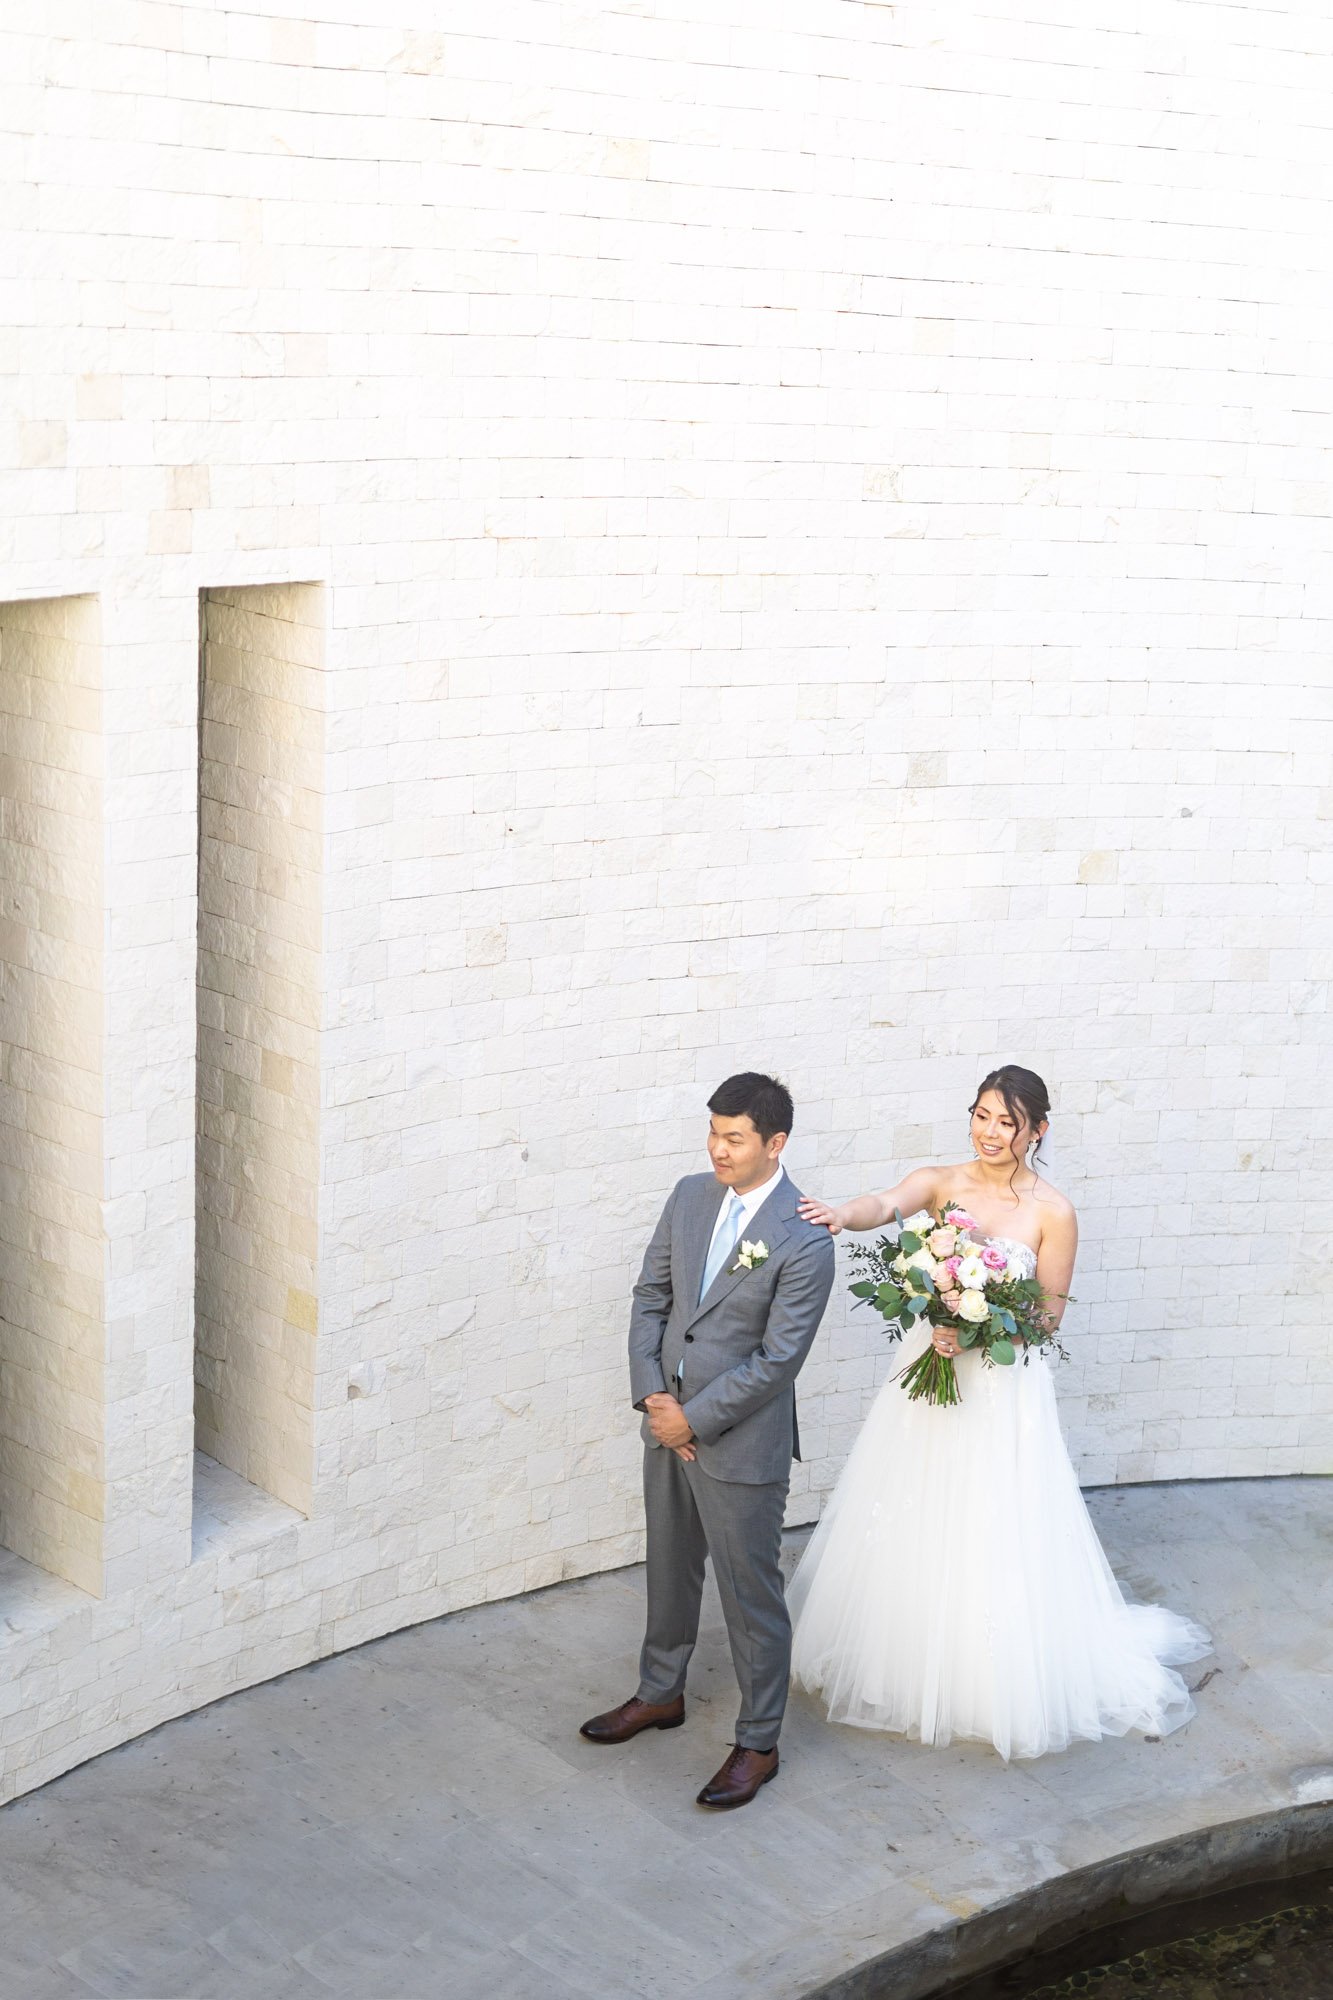 Kevin Sunny Wedding - First Look - 8.jpg